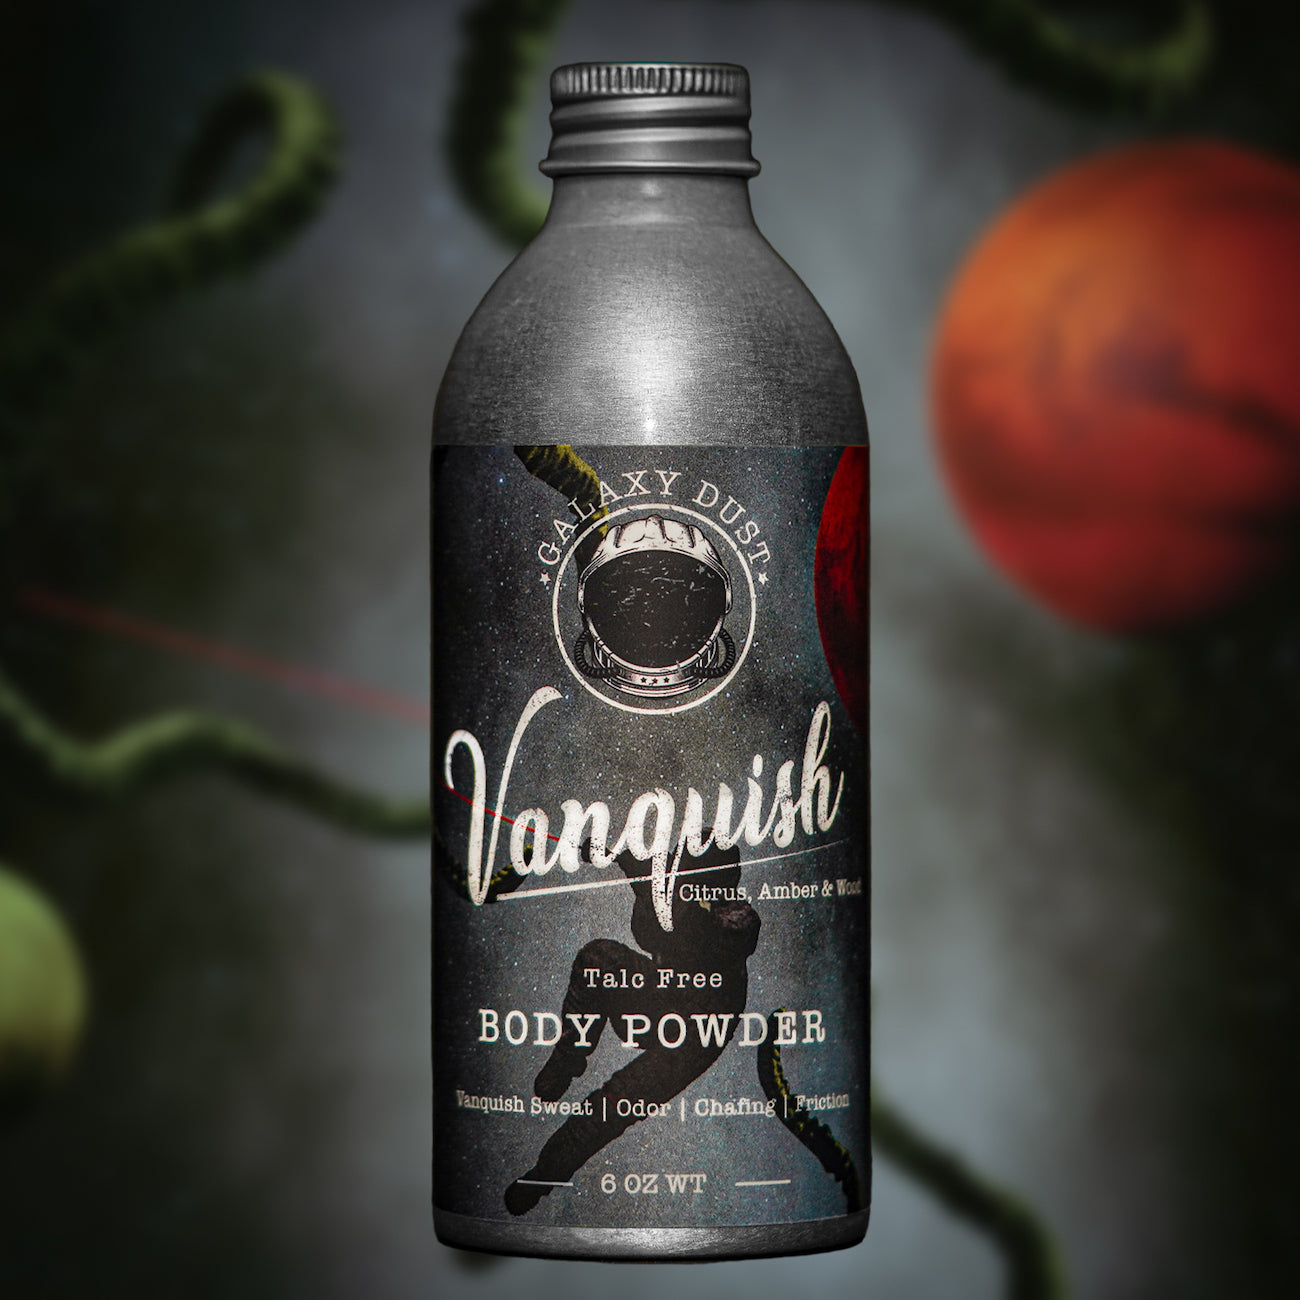 A bottle of Vanquish body powder for men